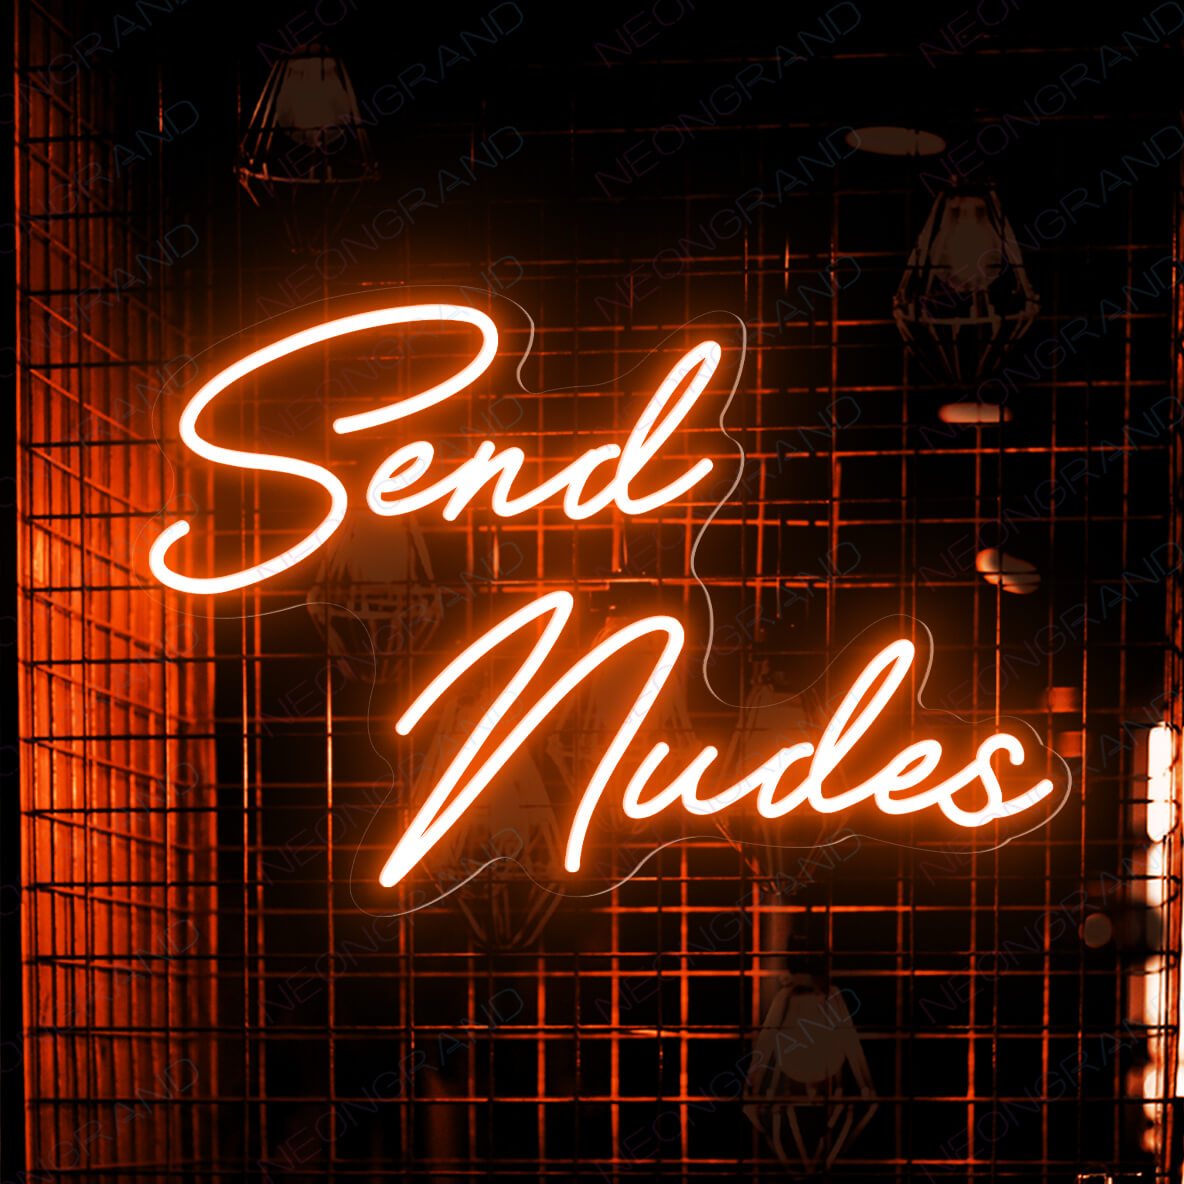 Send Nudes Neon Sign Sexy Led Light orange